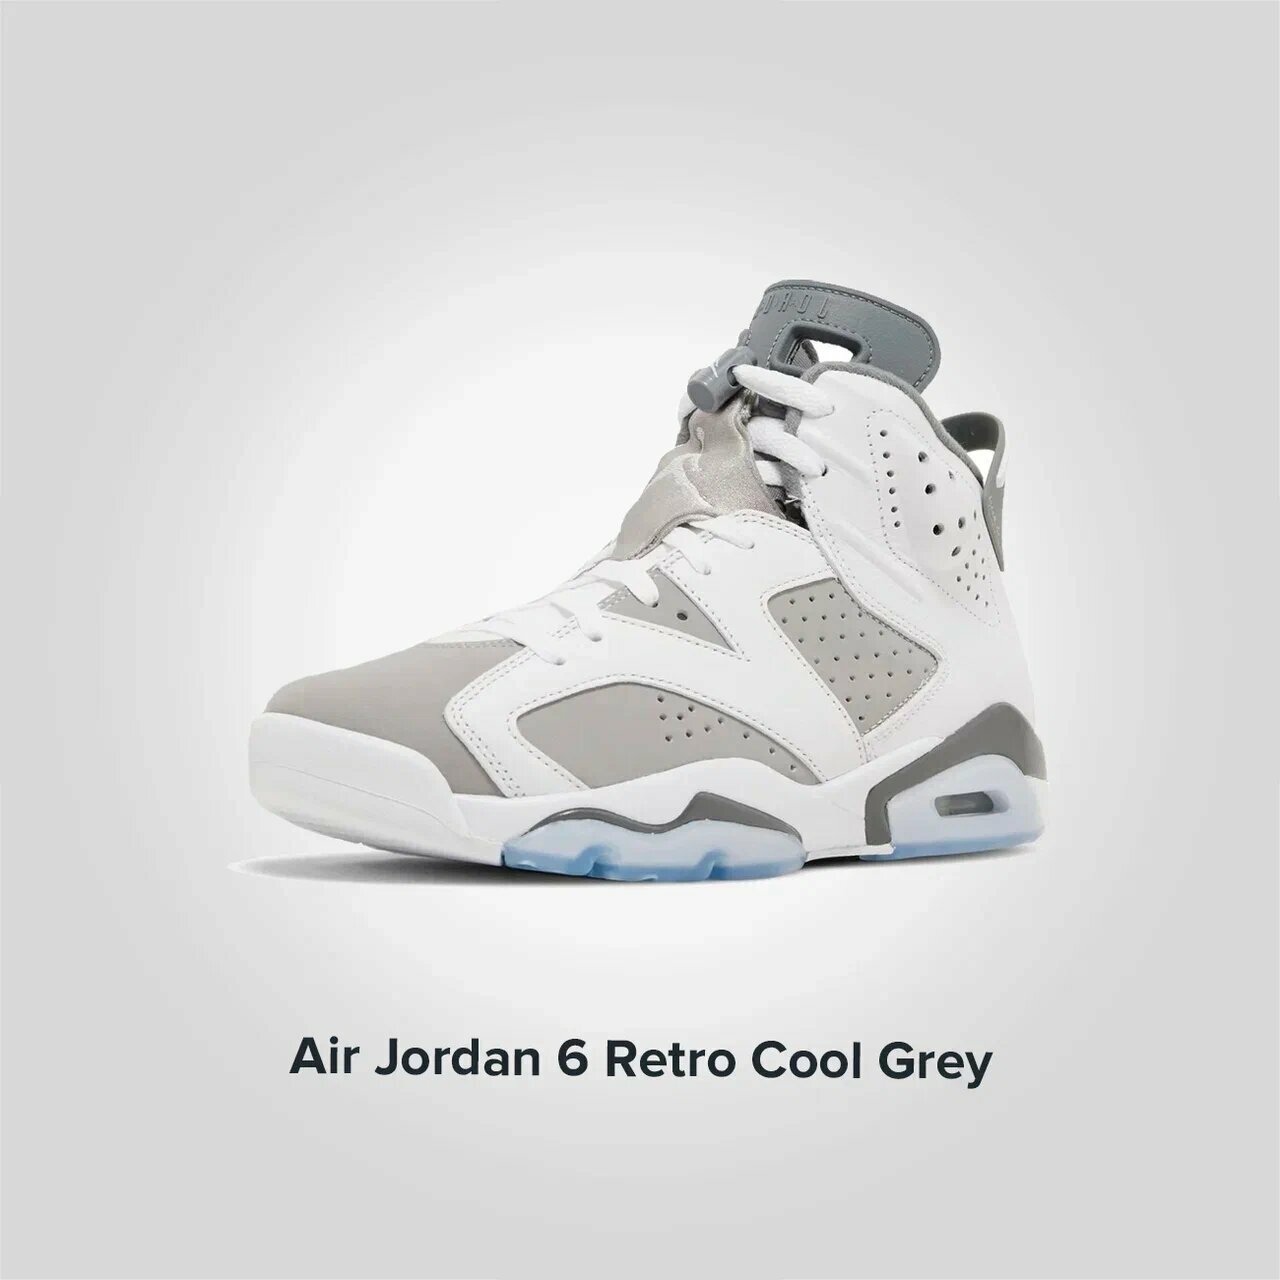 Air Jordan 6 Retro Cool Grey